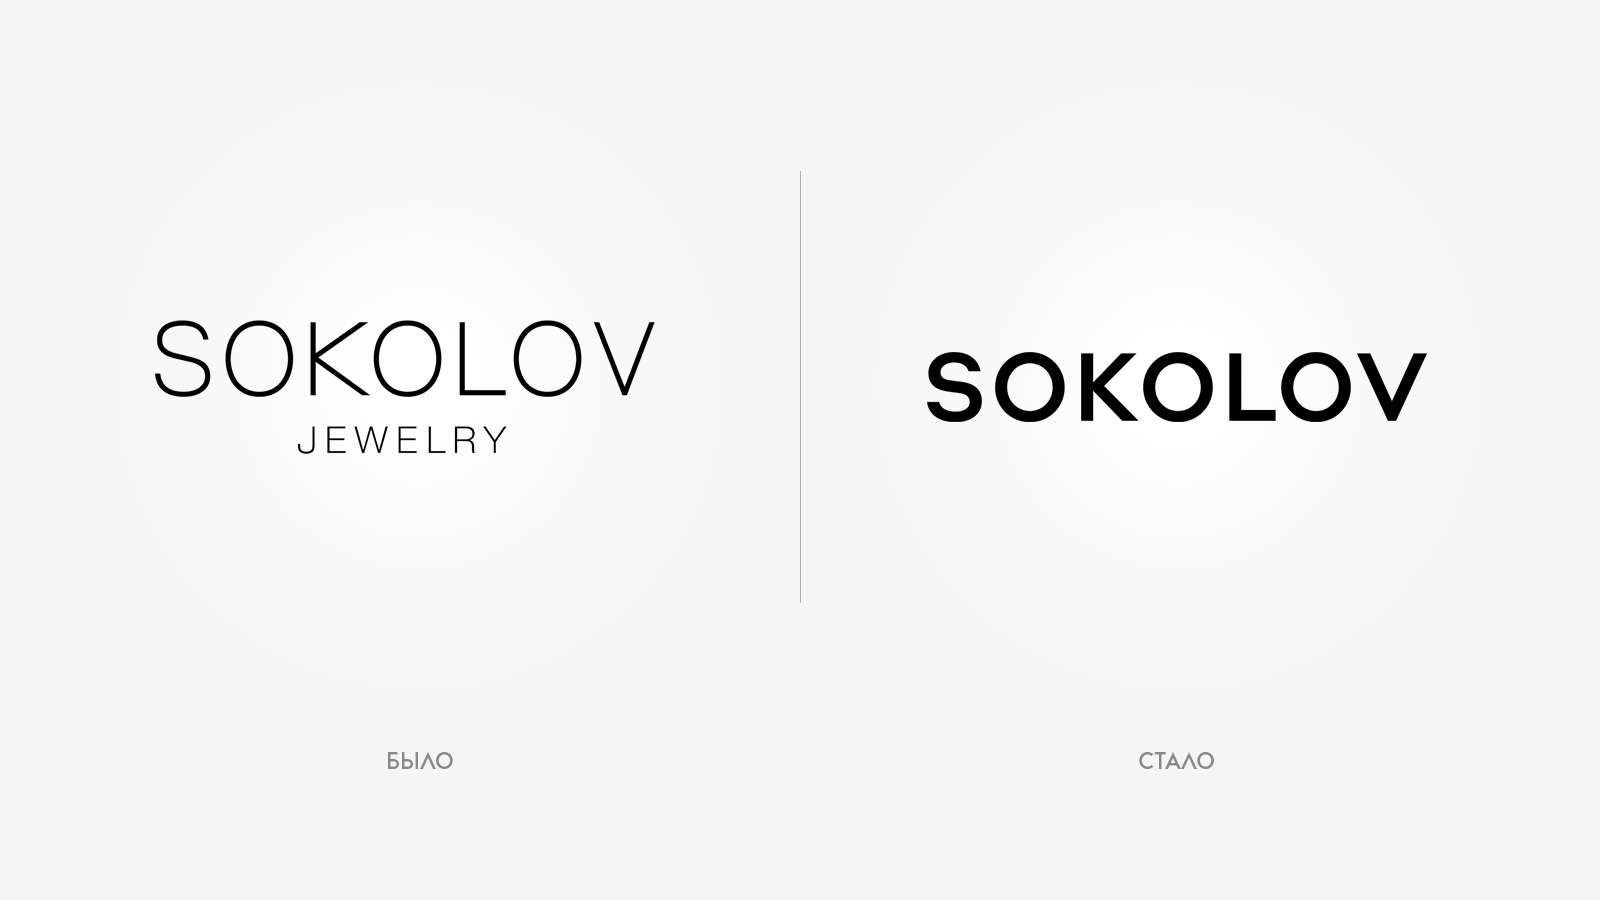 Ювелирный бренд Sokolov обновил логотип